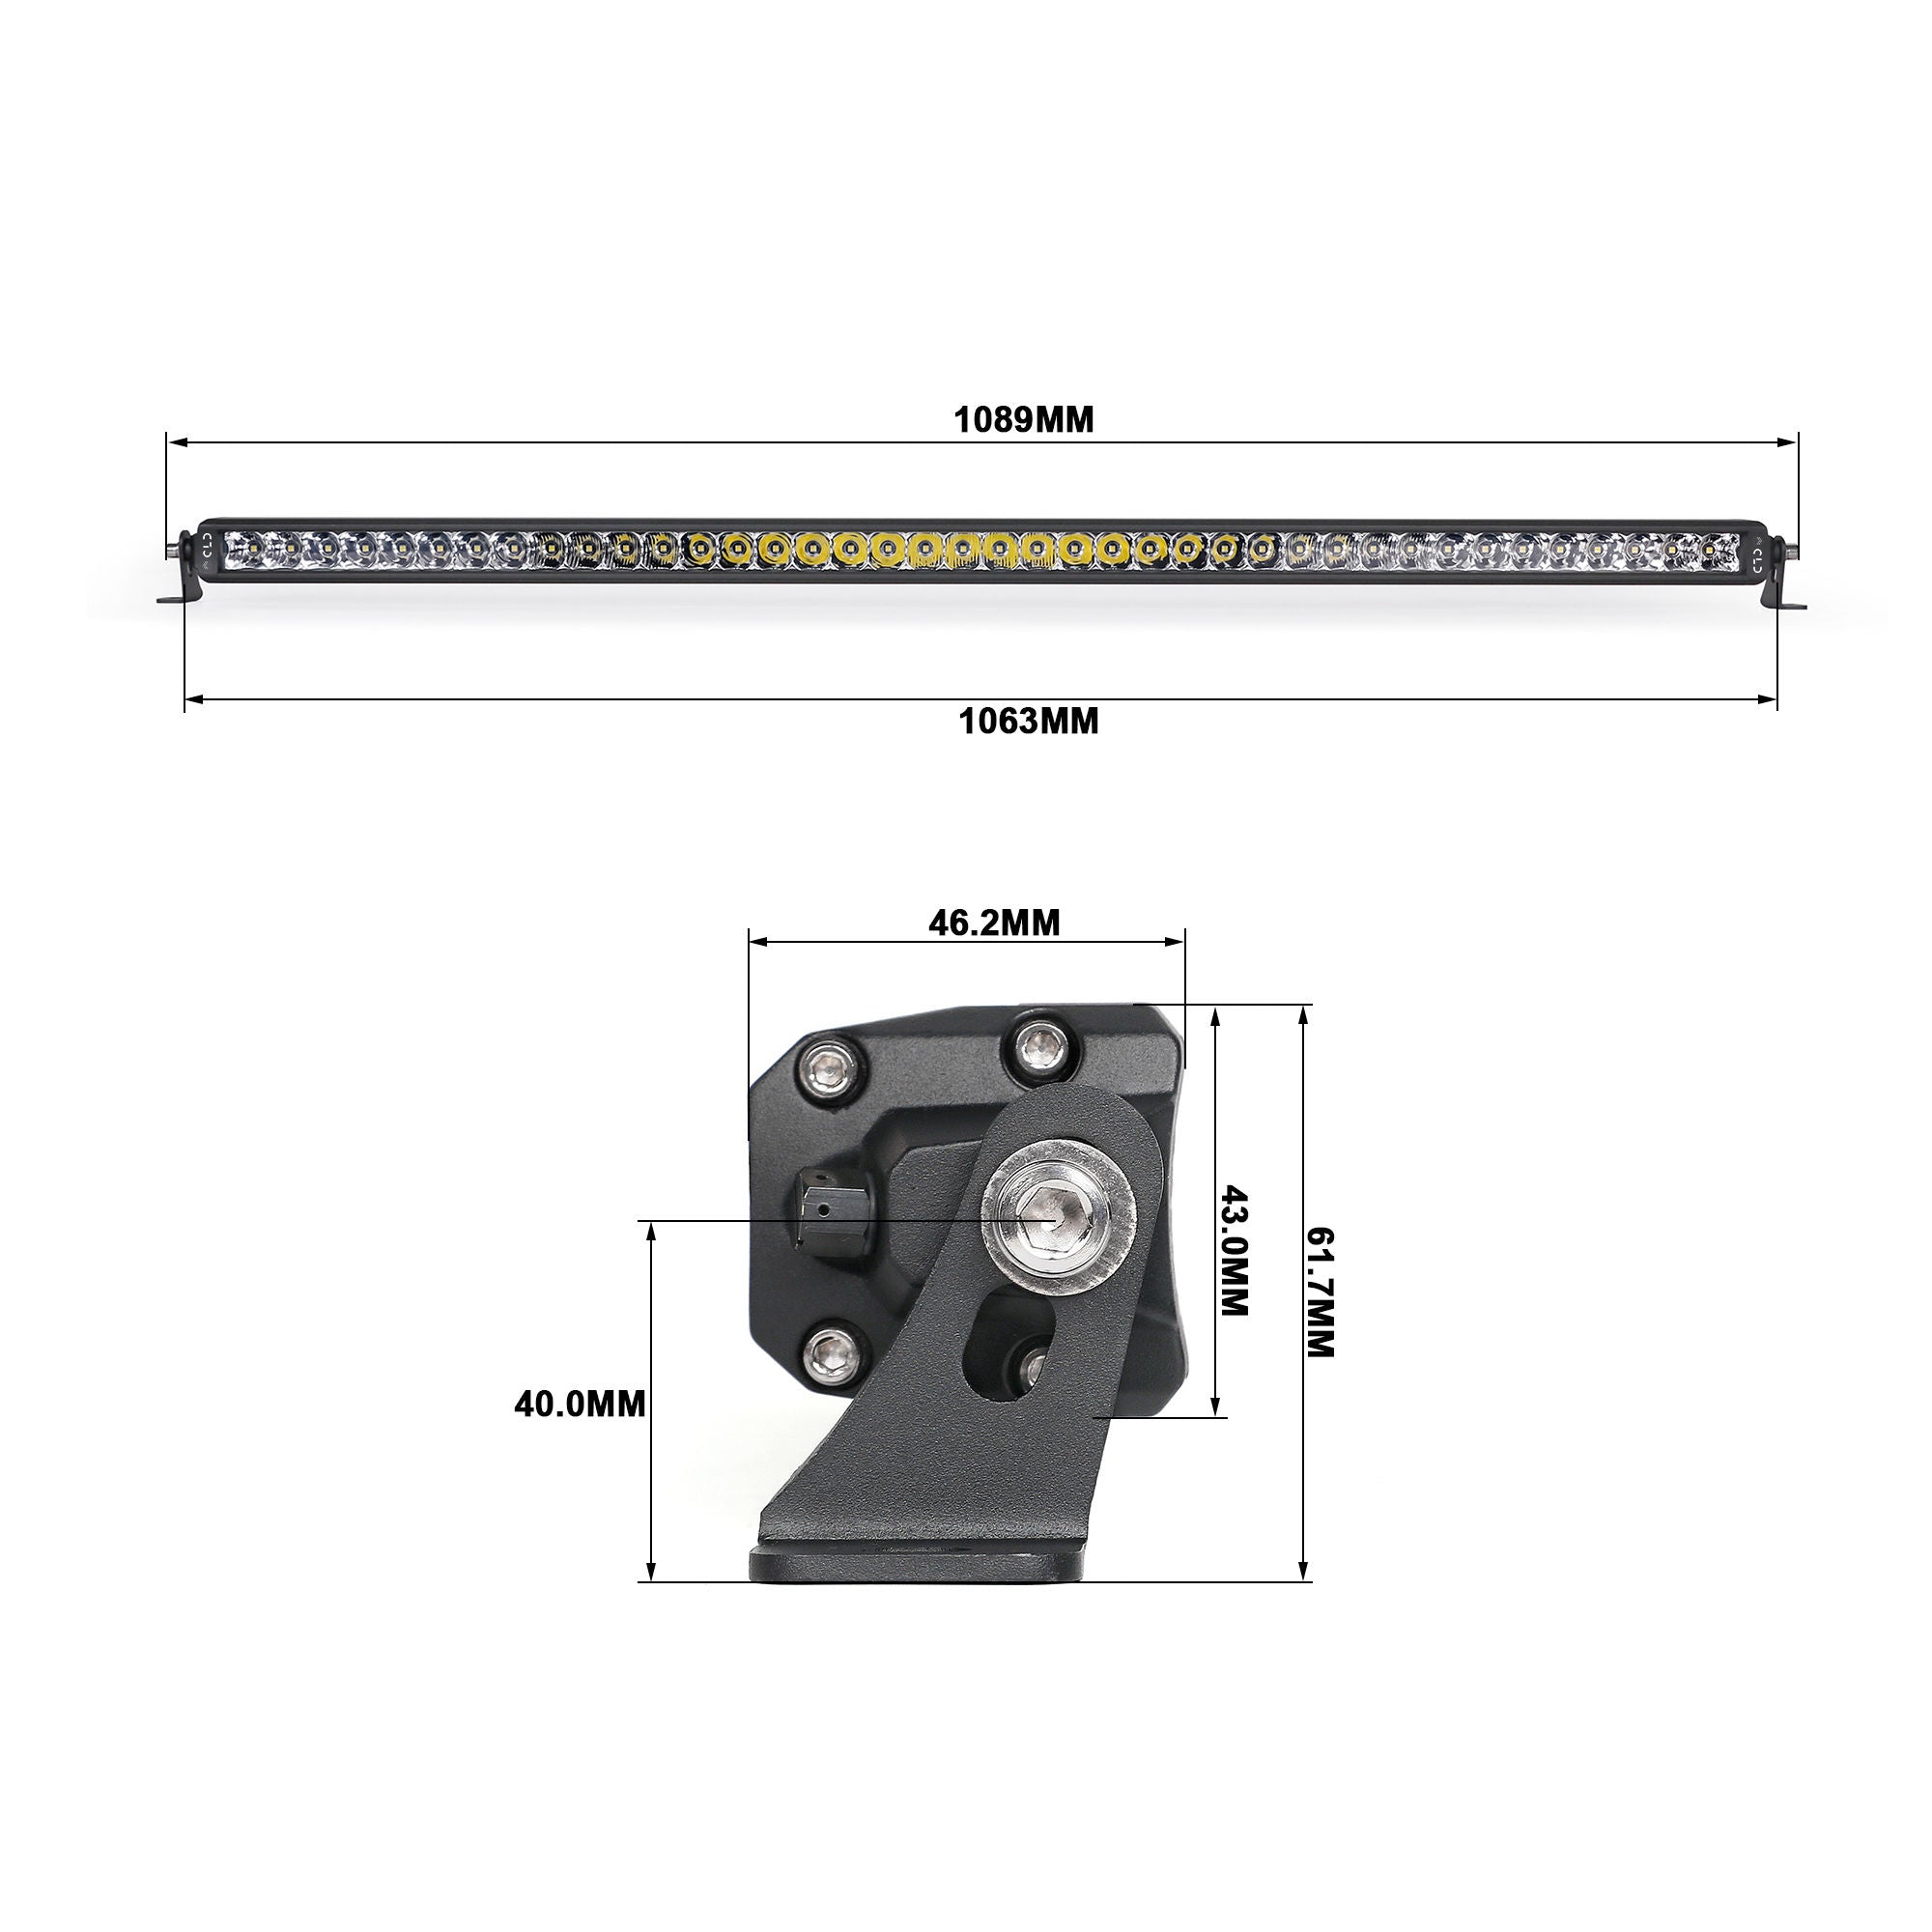 CLD CLDBAR40 - 40" Straight Single Row Spot/Flood Combo Beam LED Light Bar - 11290 Lumens